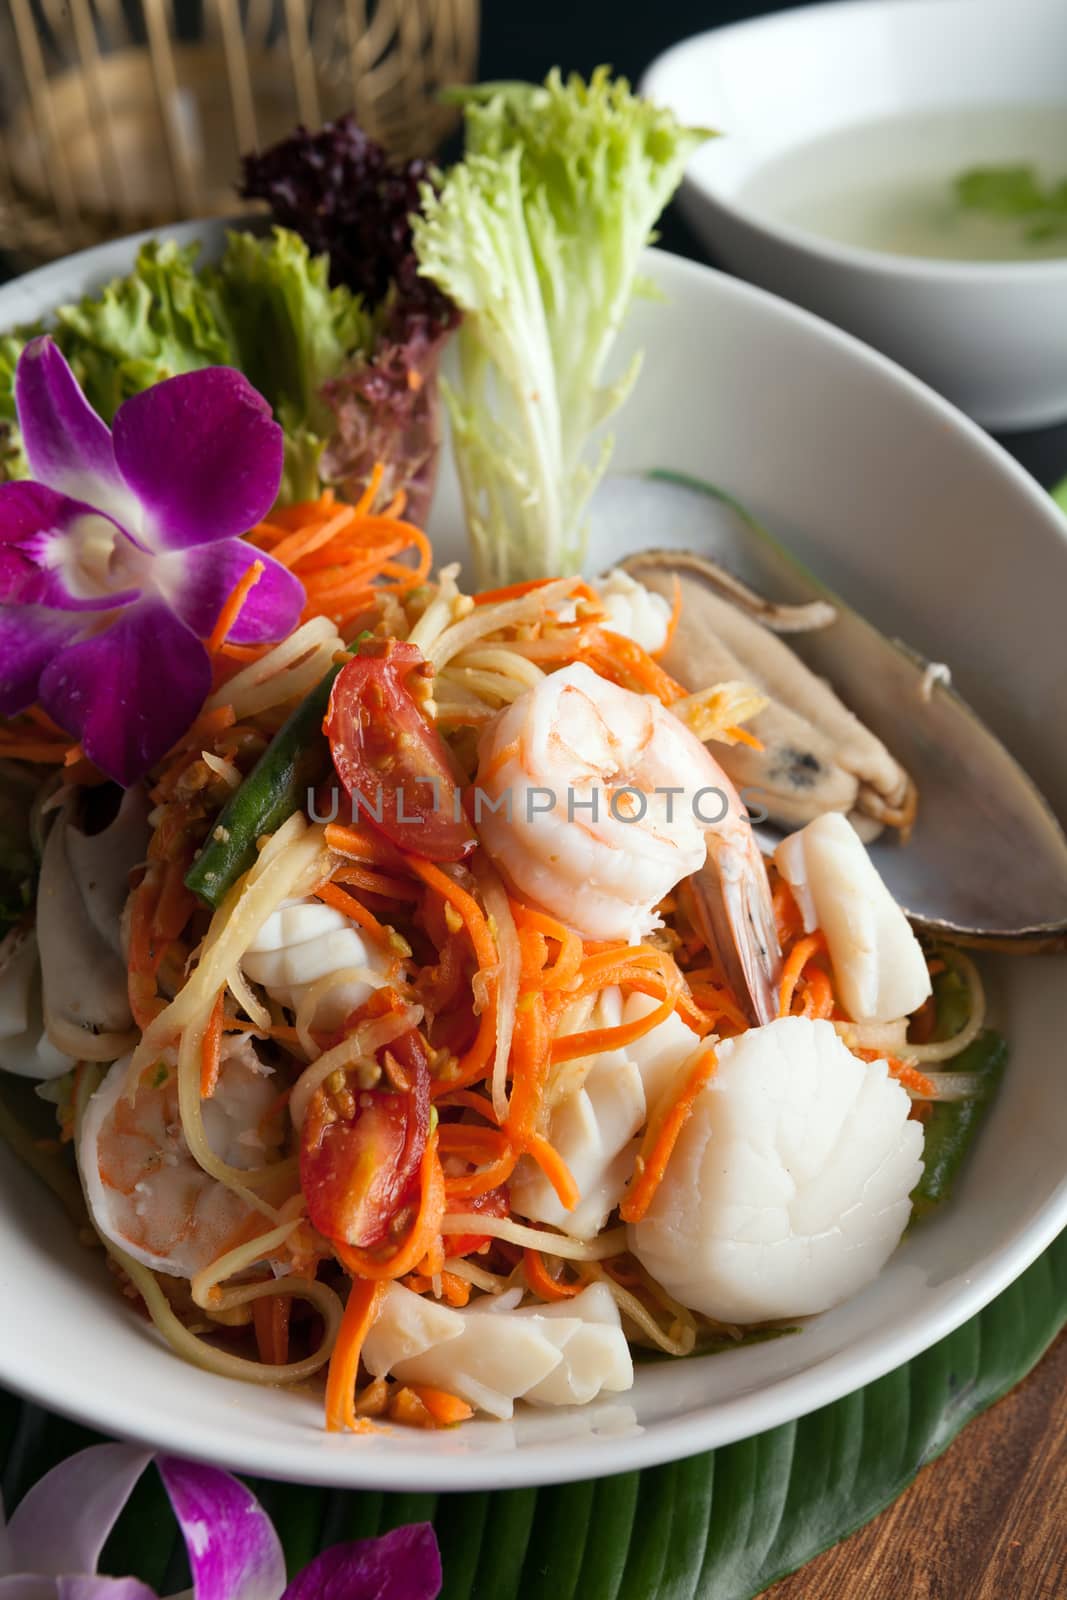 Traditional dish of freshly prepared Thai food.  Thai seafood and som tum green papaya salad.